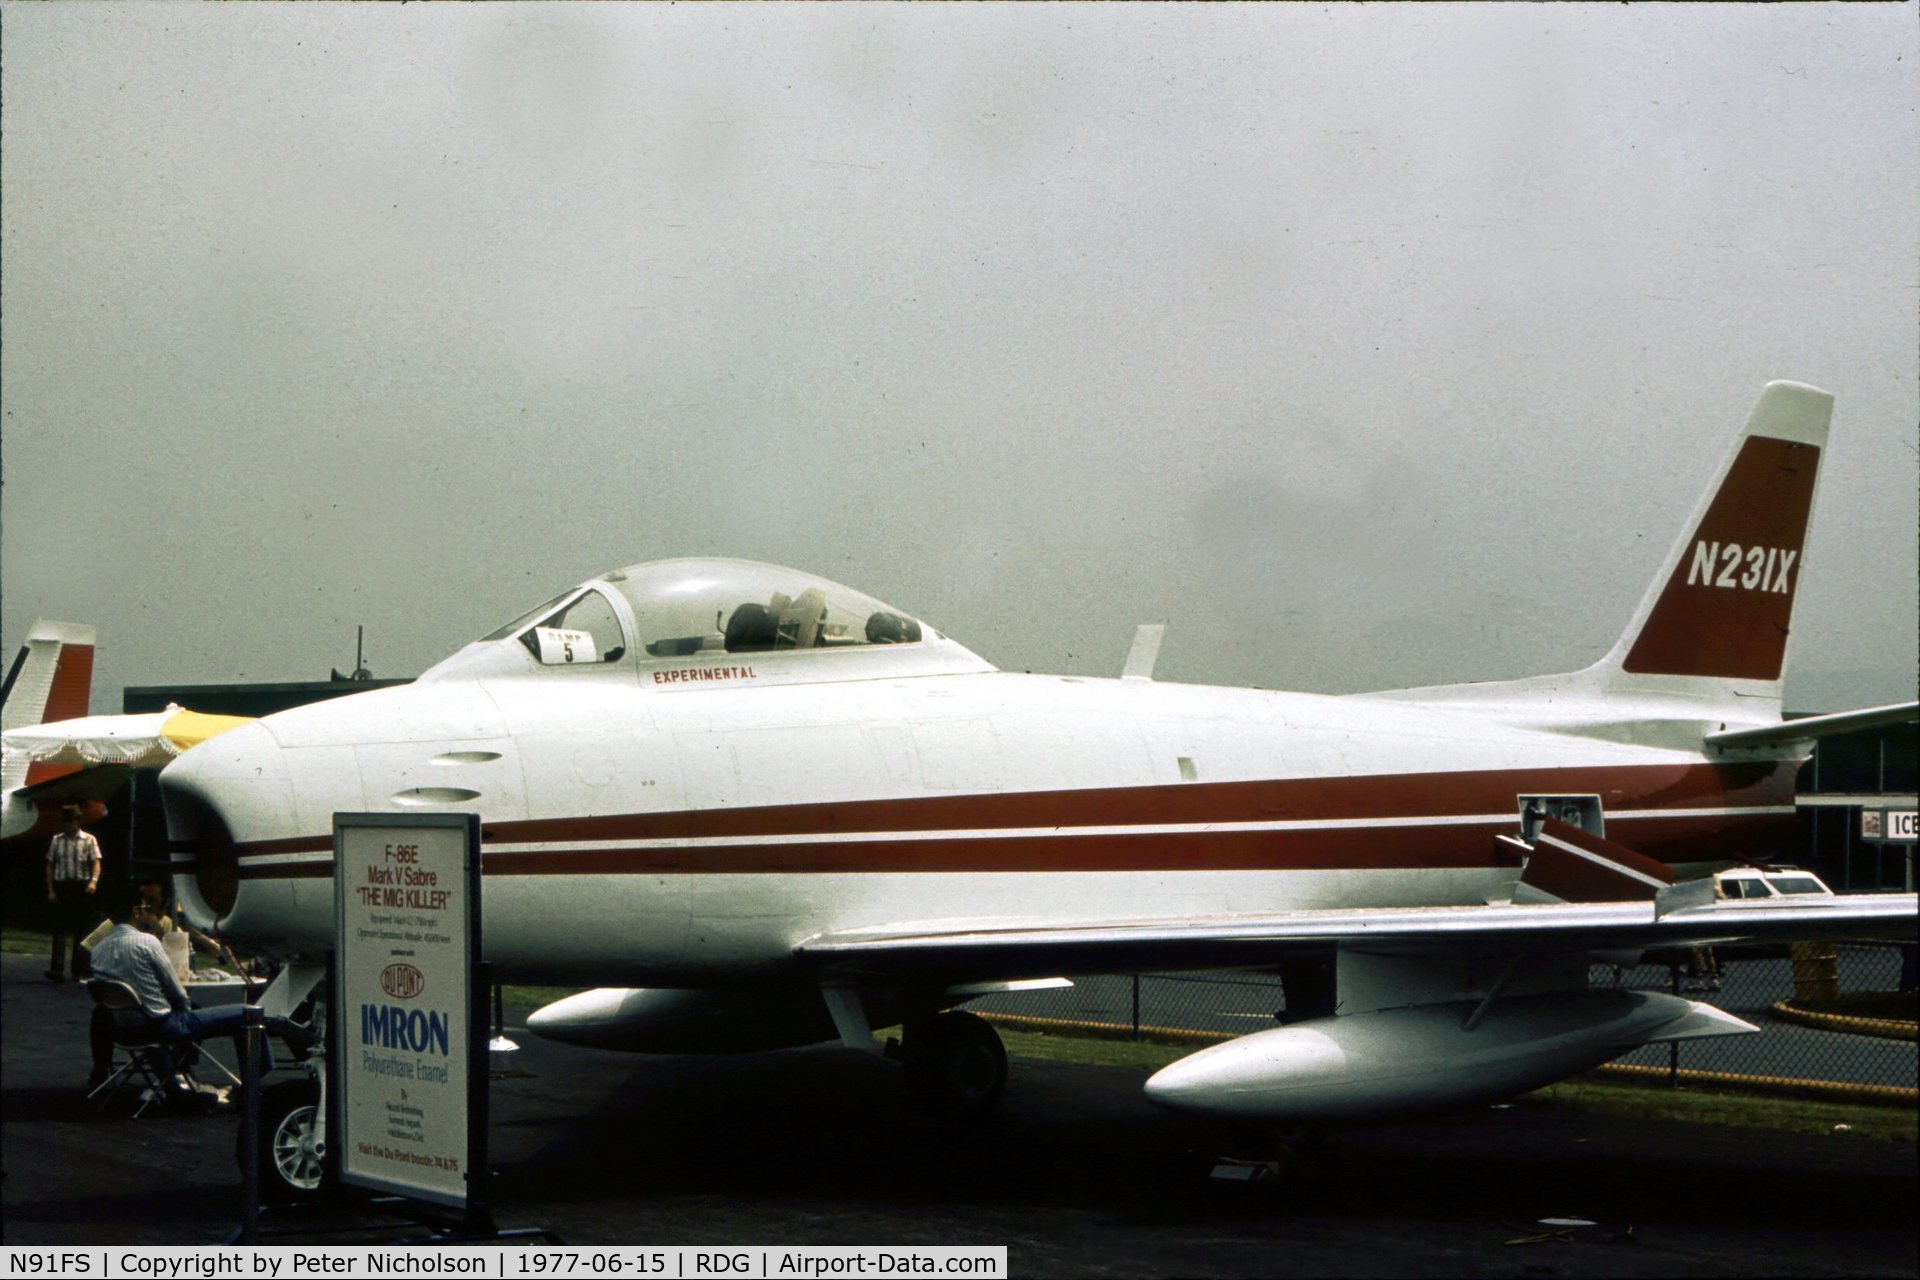 N91FS, 1954 Canadair F-86 MK.5 Sabre C/N 1021, With regn N231X this Canadair Sabre was displayed at the 1977 Reading Airshow in Pennsylvania.